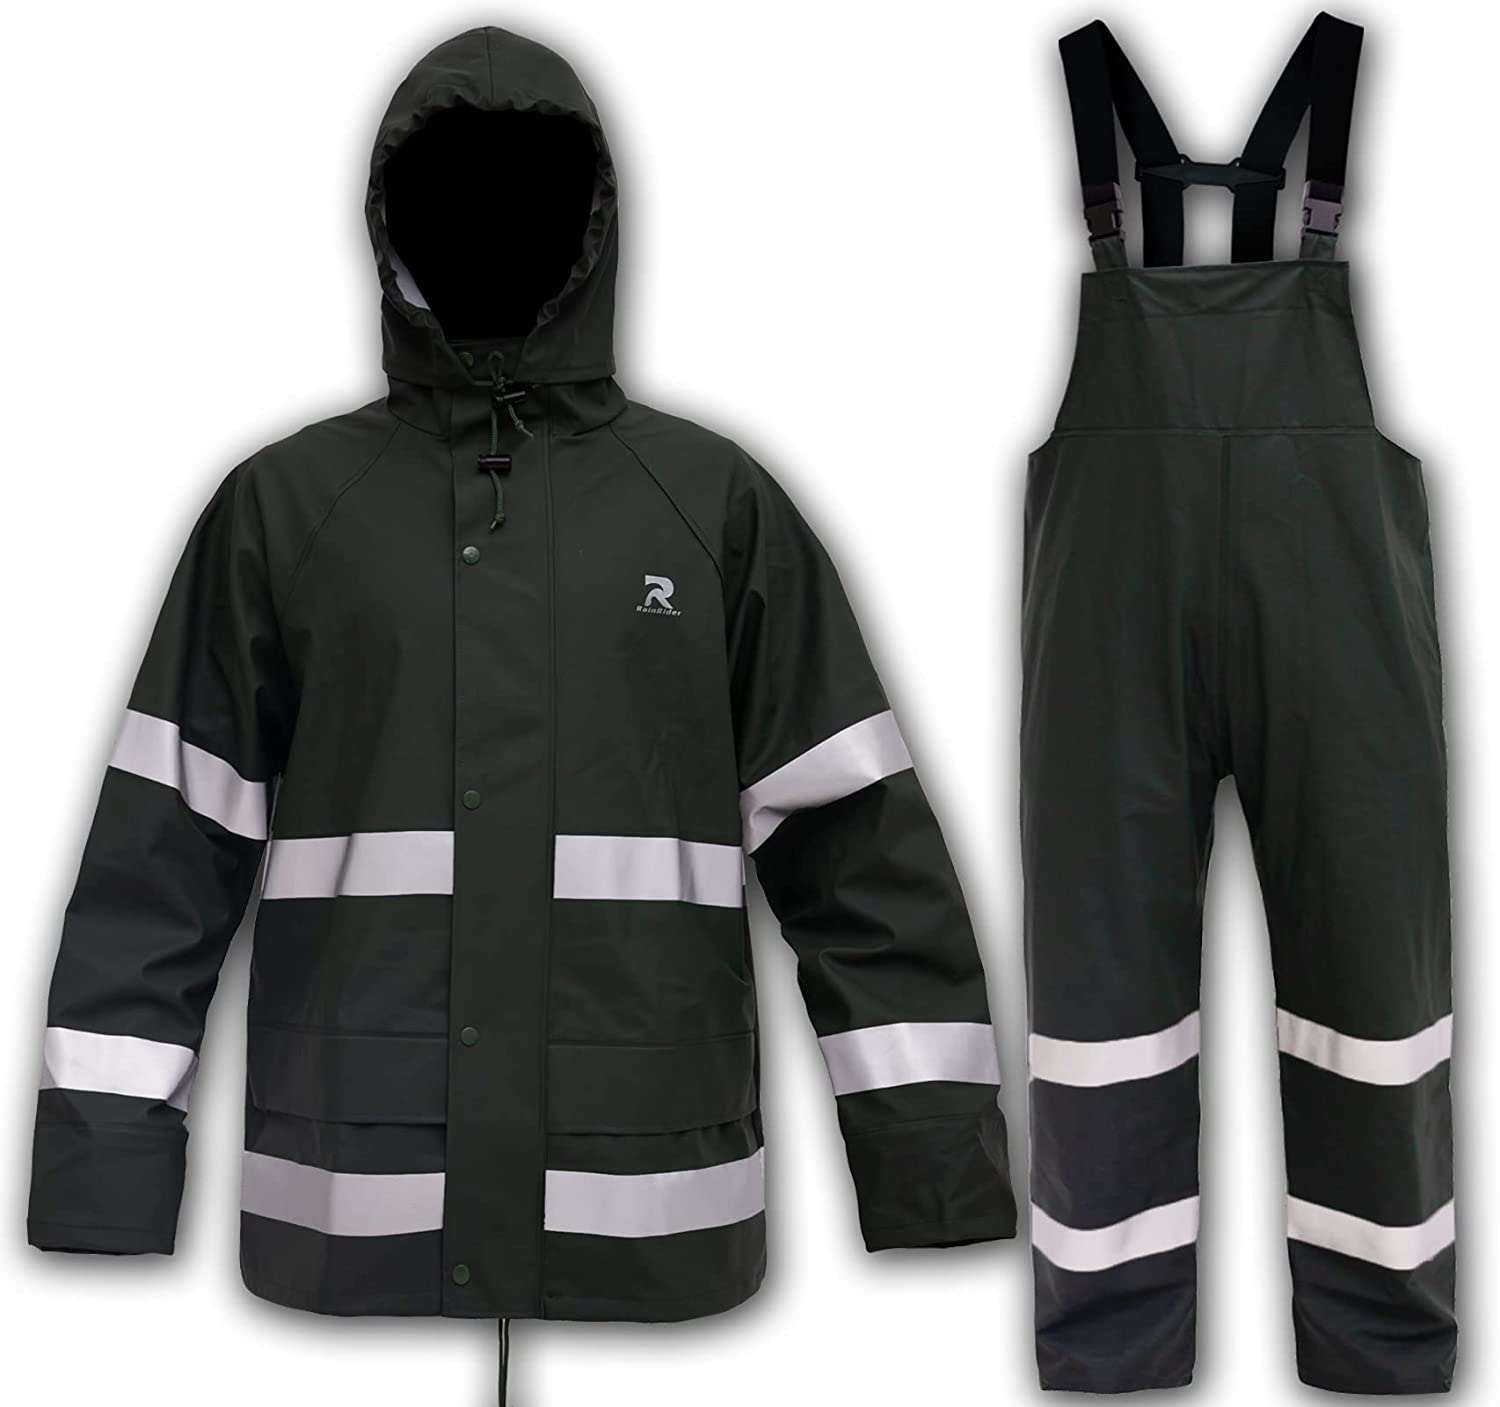 RainRider Rain Suits for Men Women Waterproof Heavy Duty Raincoat